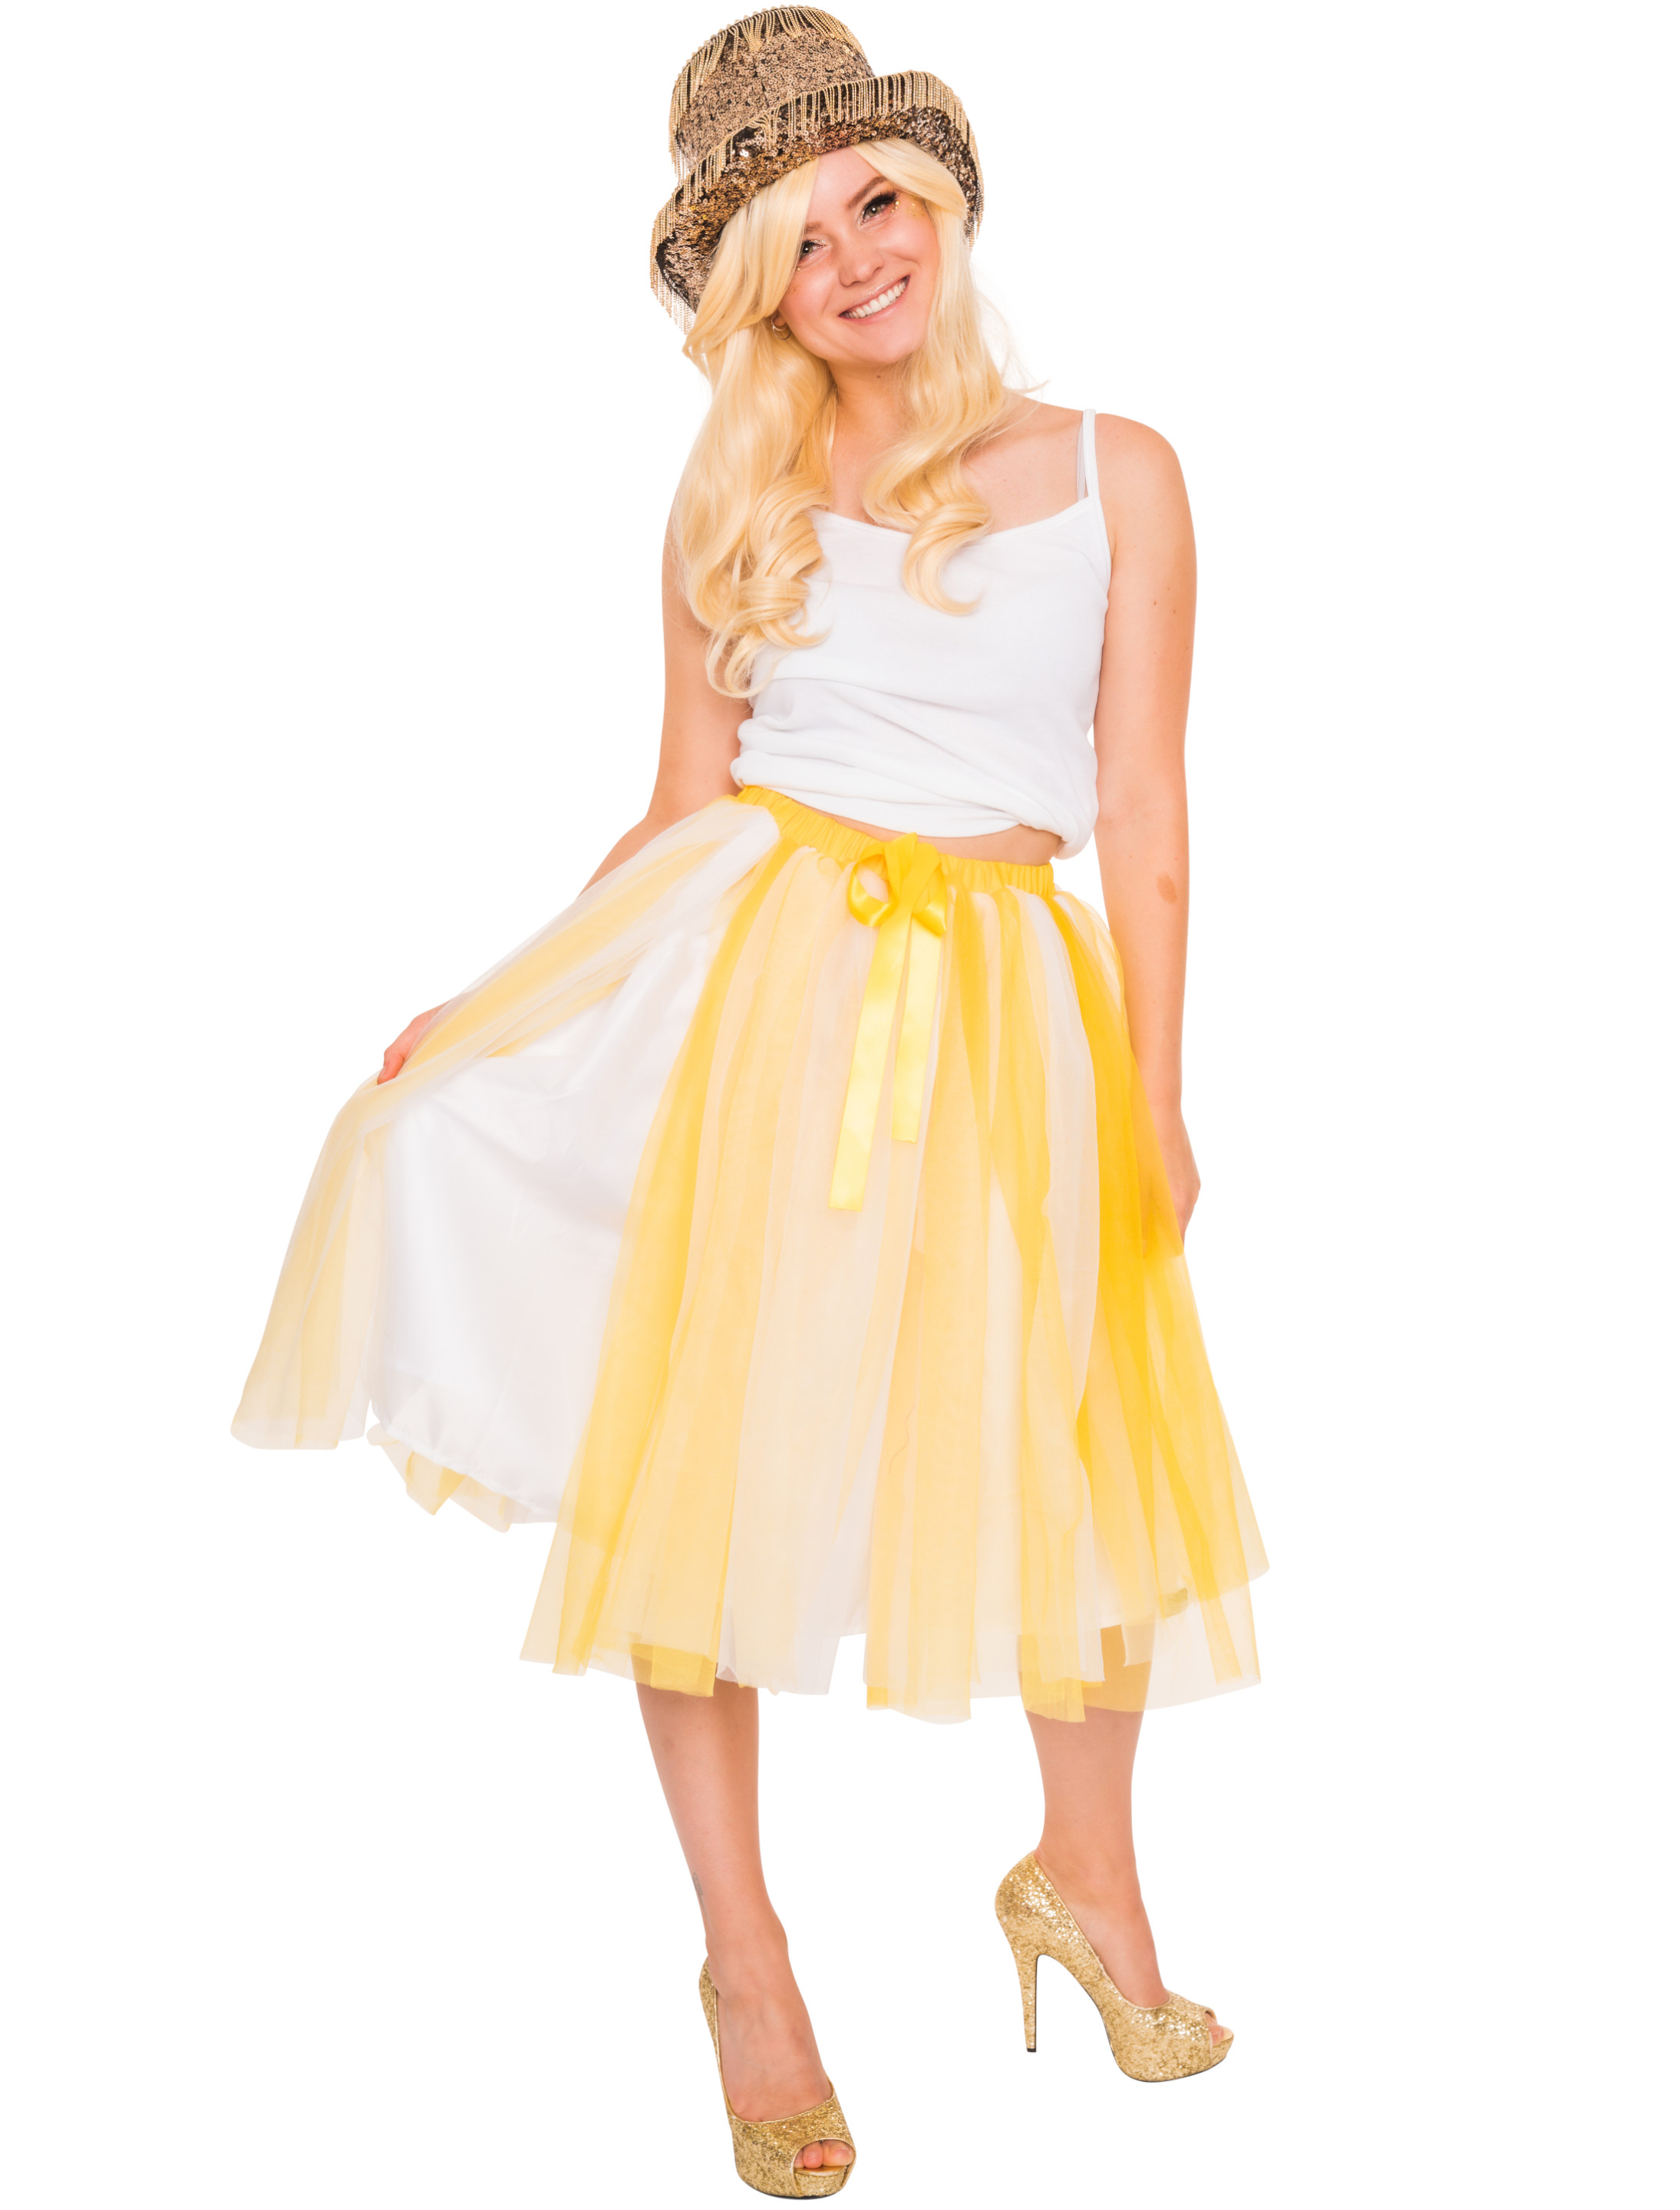 Petticoat gelb/weiß